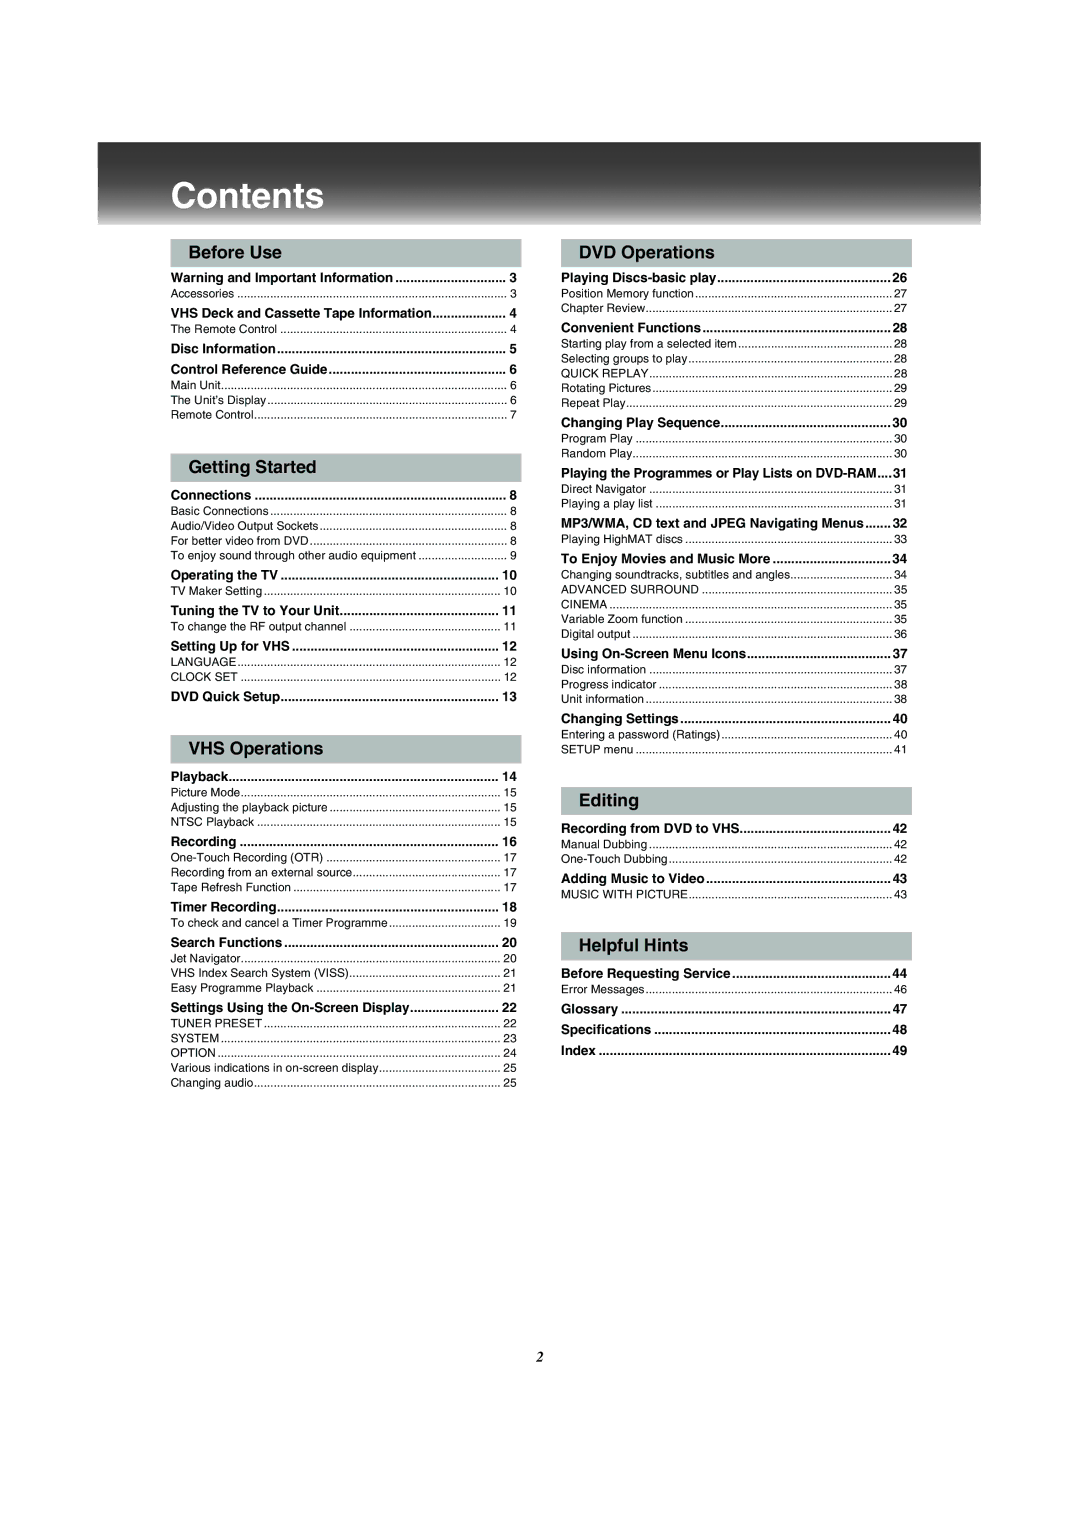 Panasonic VP-31GN manual Contents 